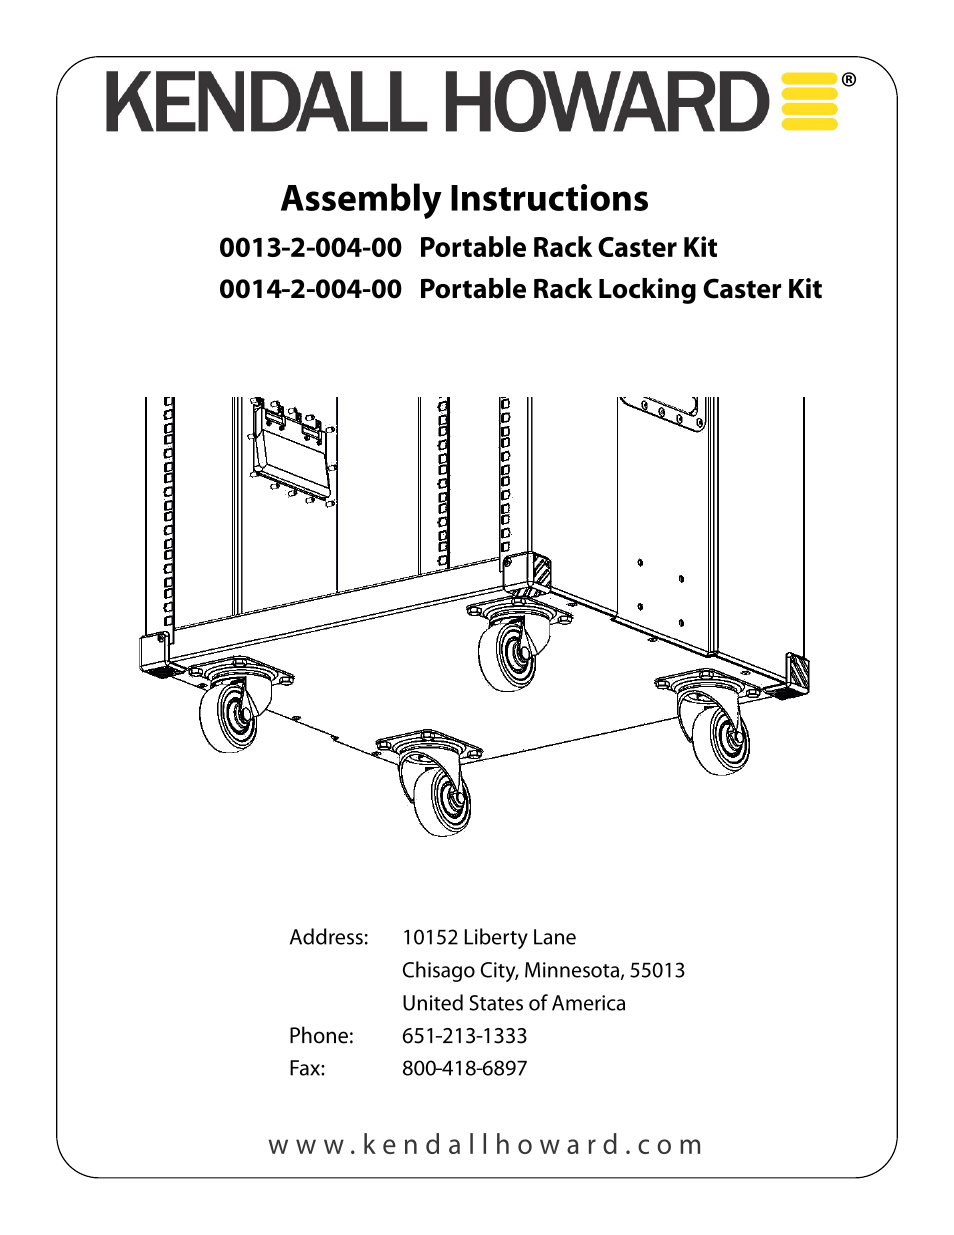 001x-2-004-00 Portable Rack Caster Kit